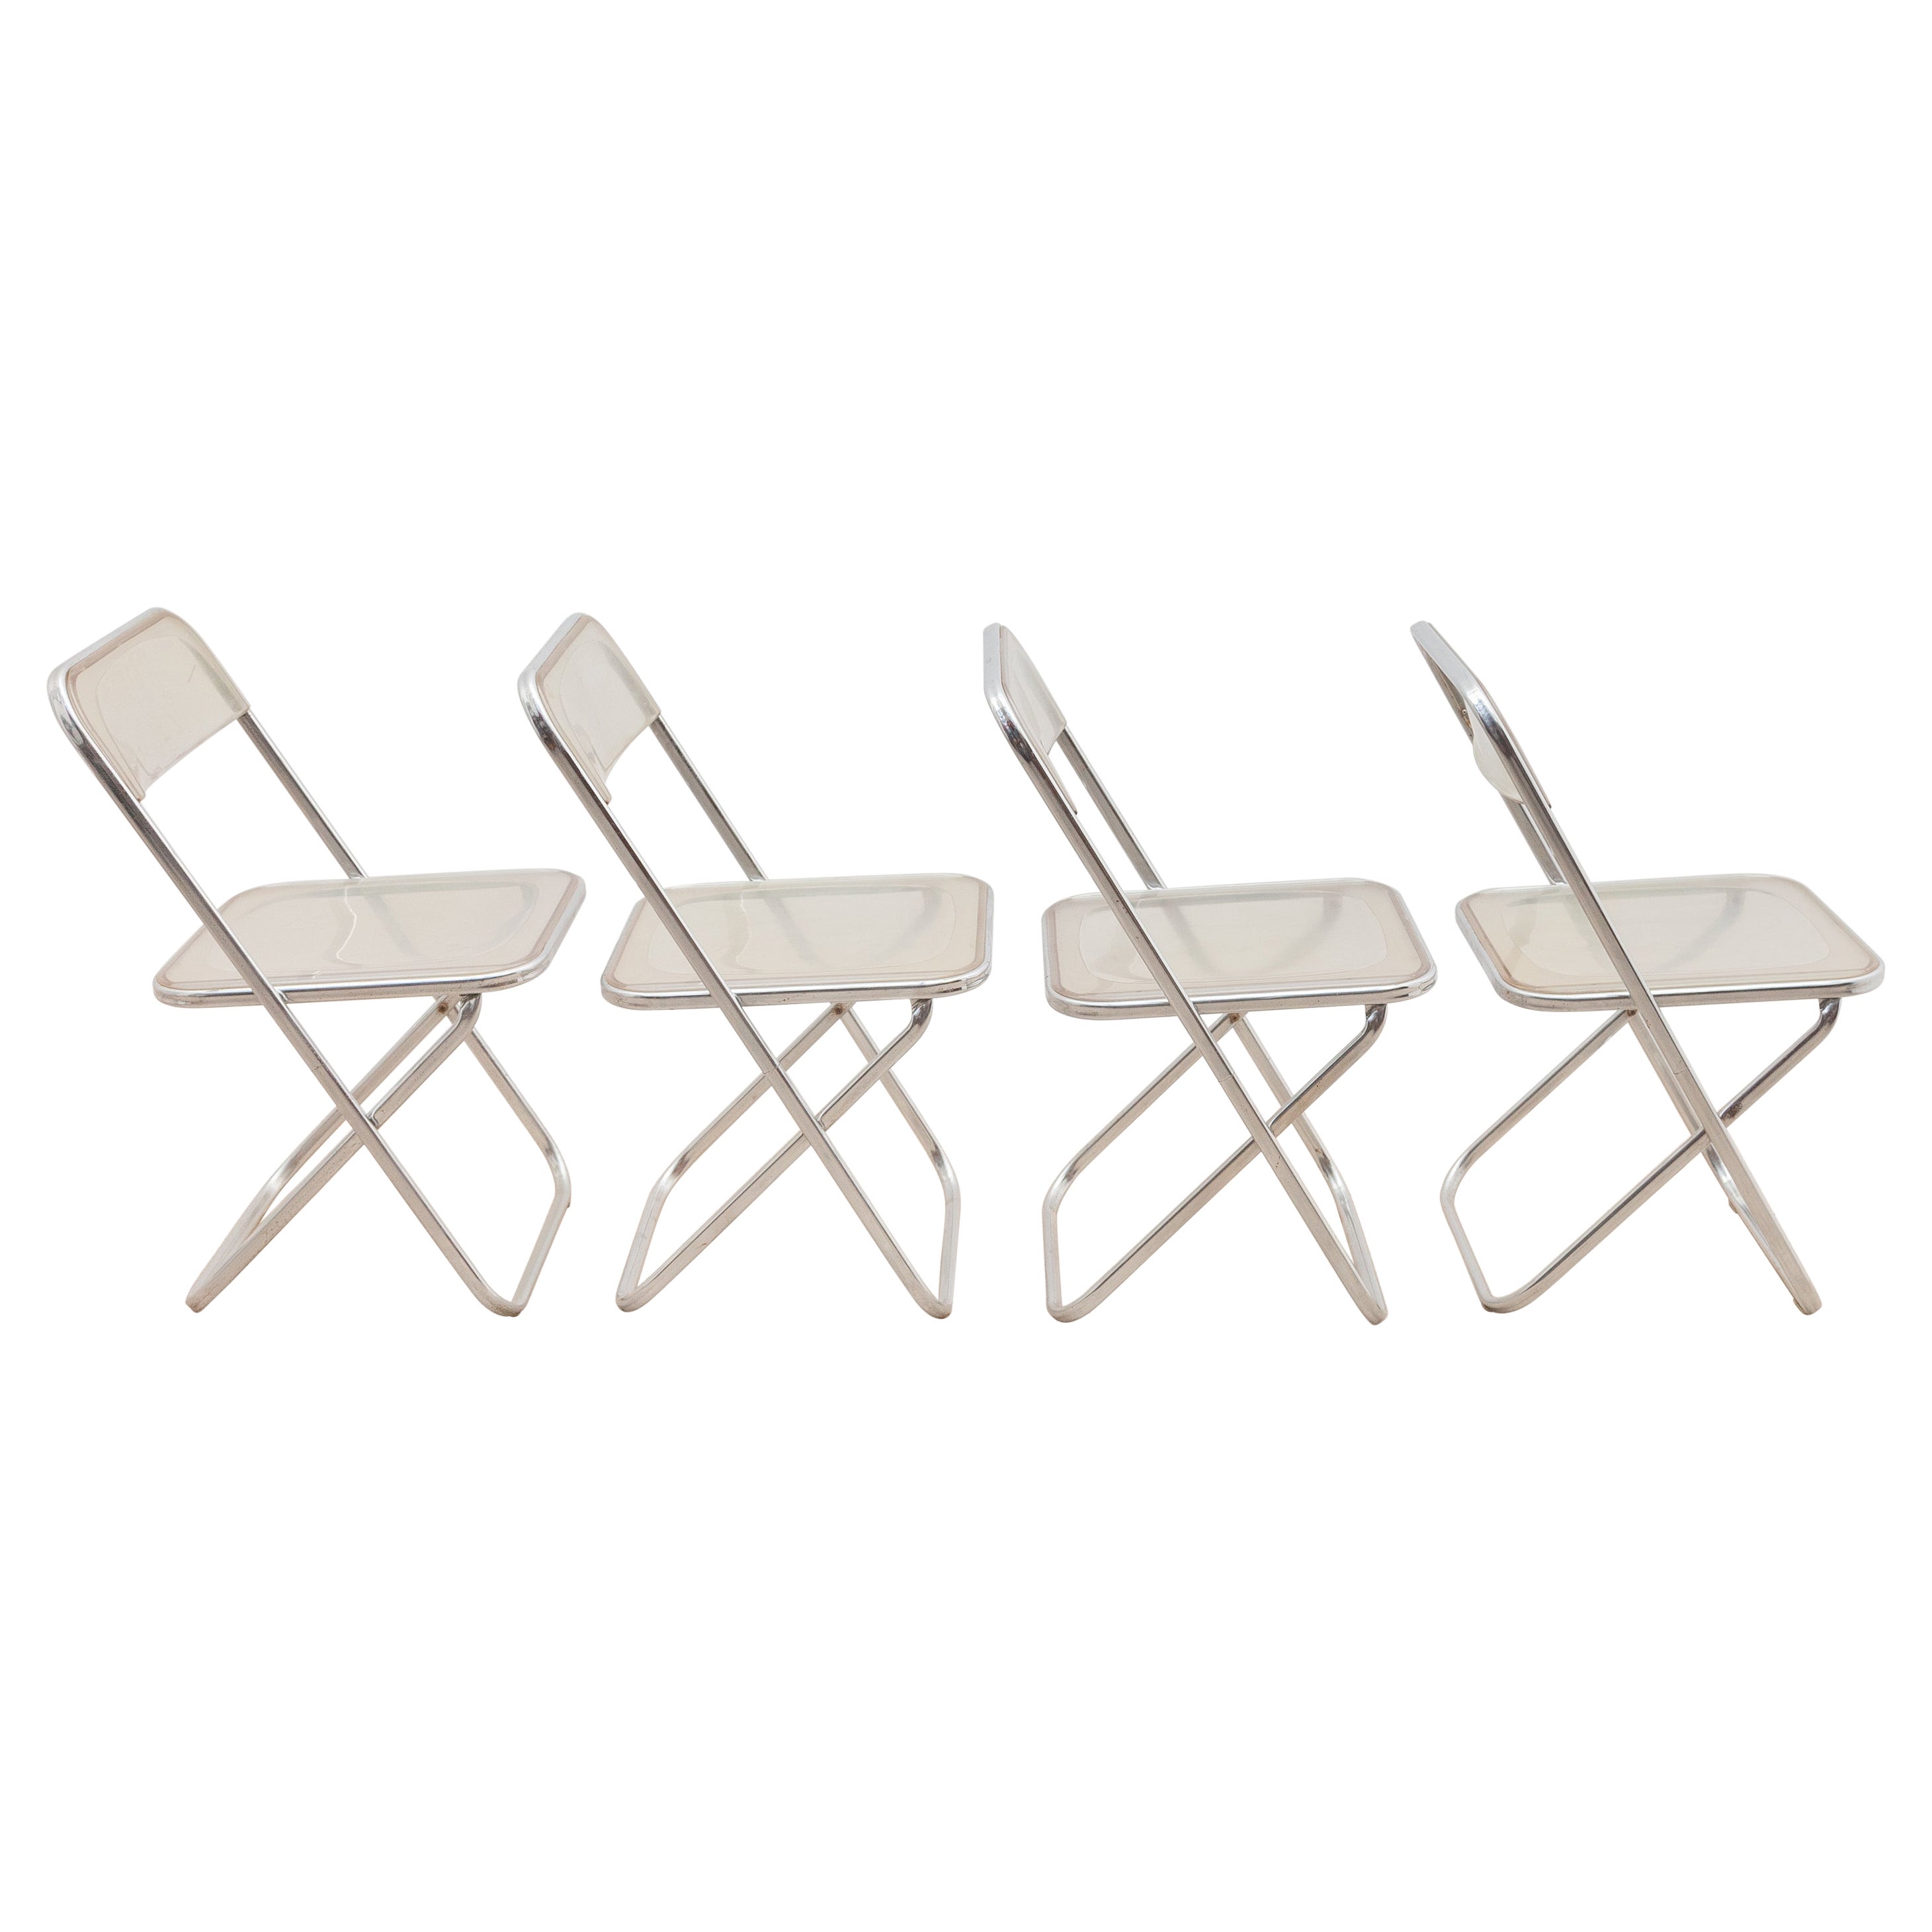 Set of Four Lucite in th style of Giancarlo Piretti's Plia chairs, circa 1970's